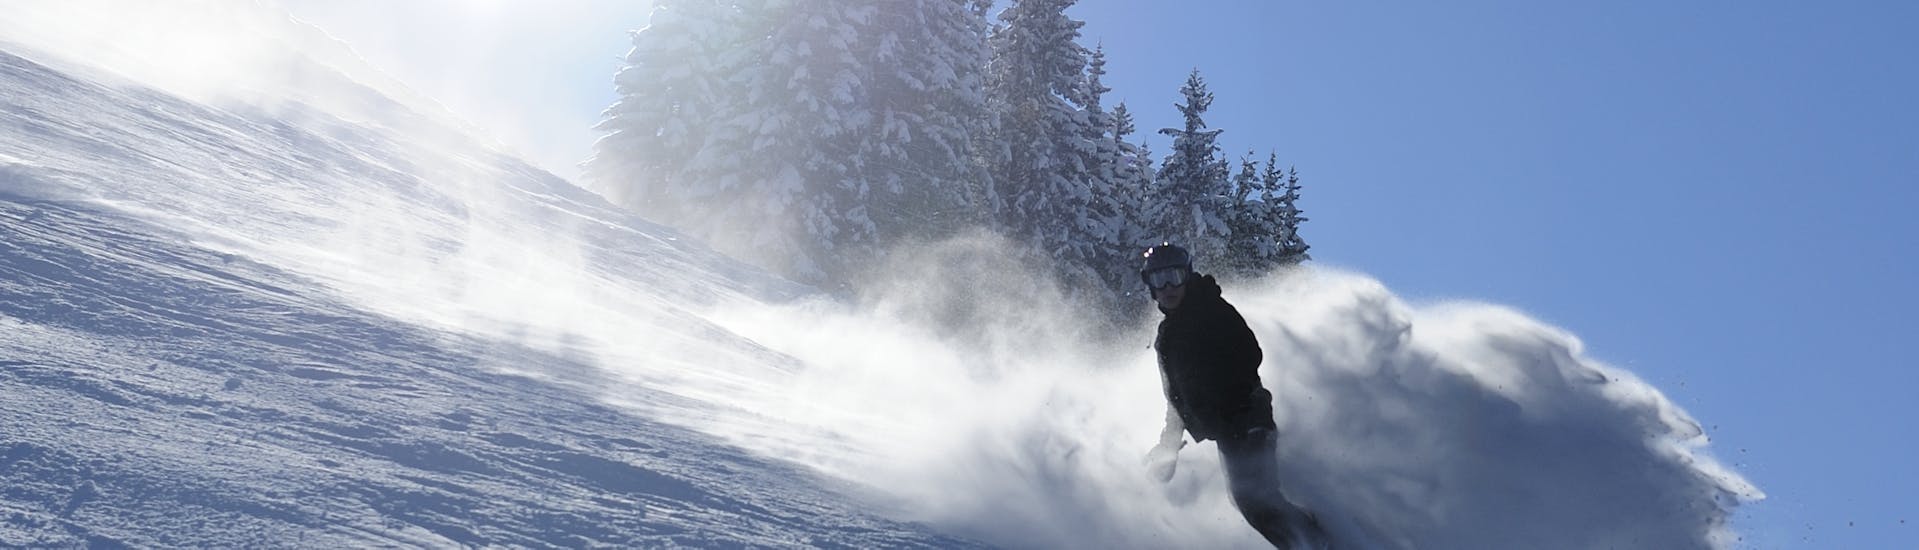 Lezioni private di Snowboard a partire da 6 anni per tutti i livelli.